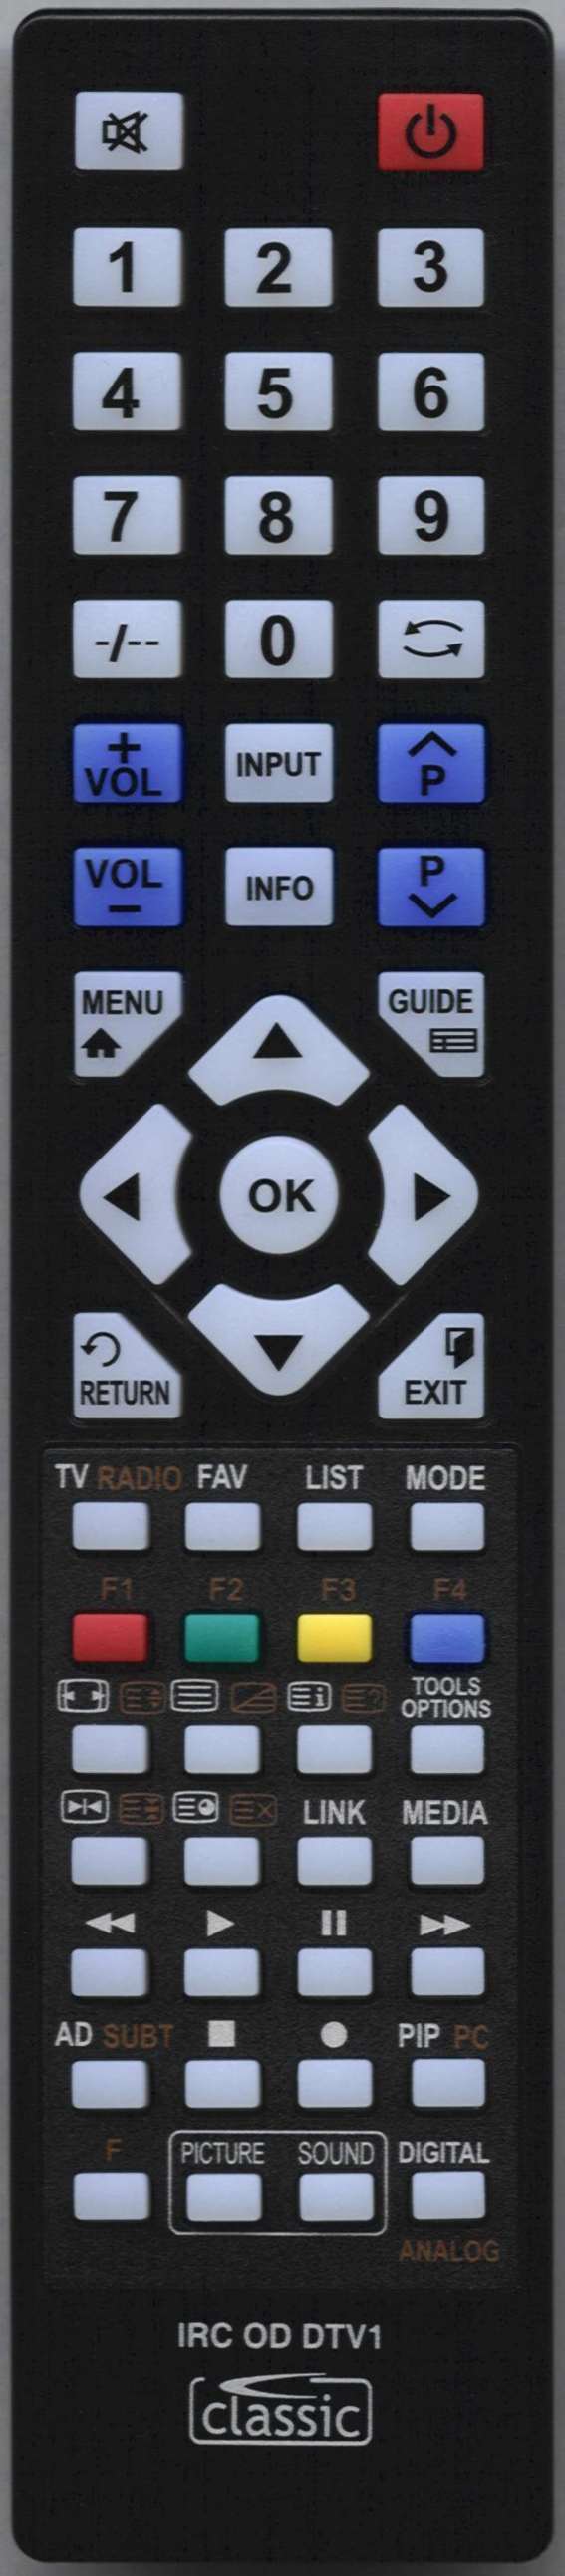 Orion CLB24B450S Remote Control